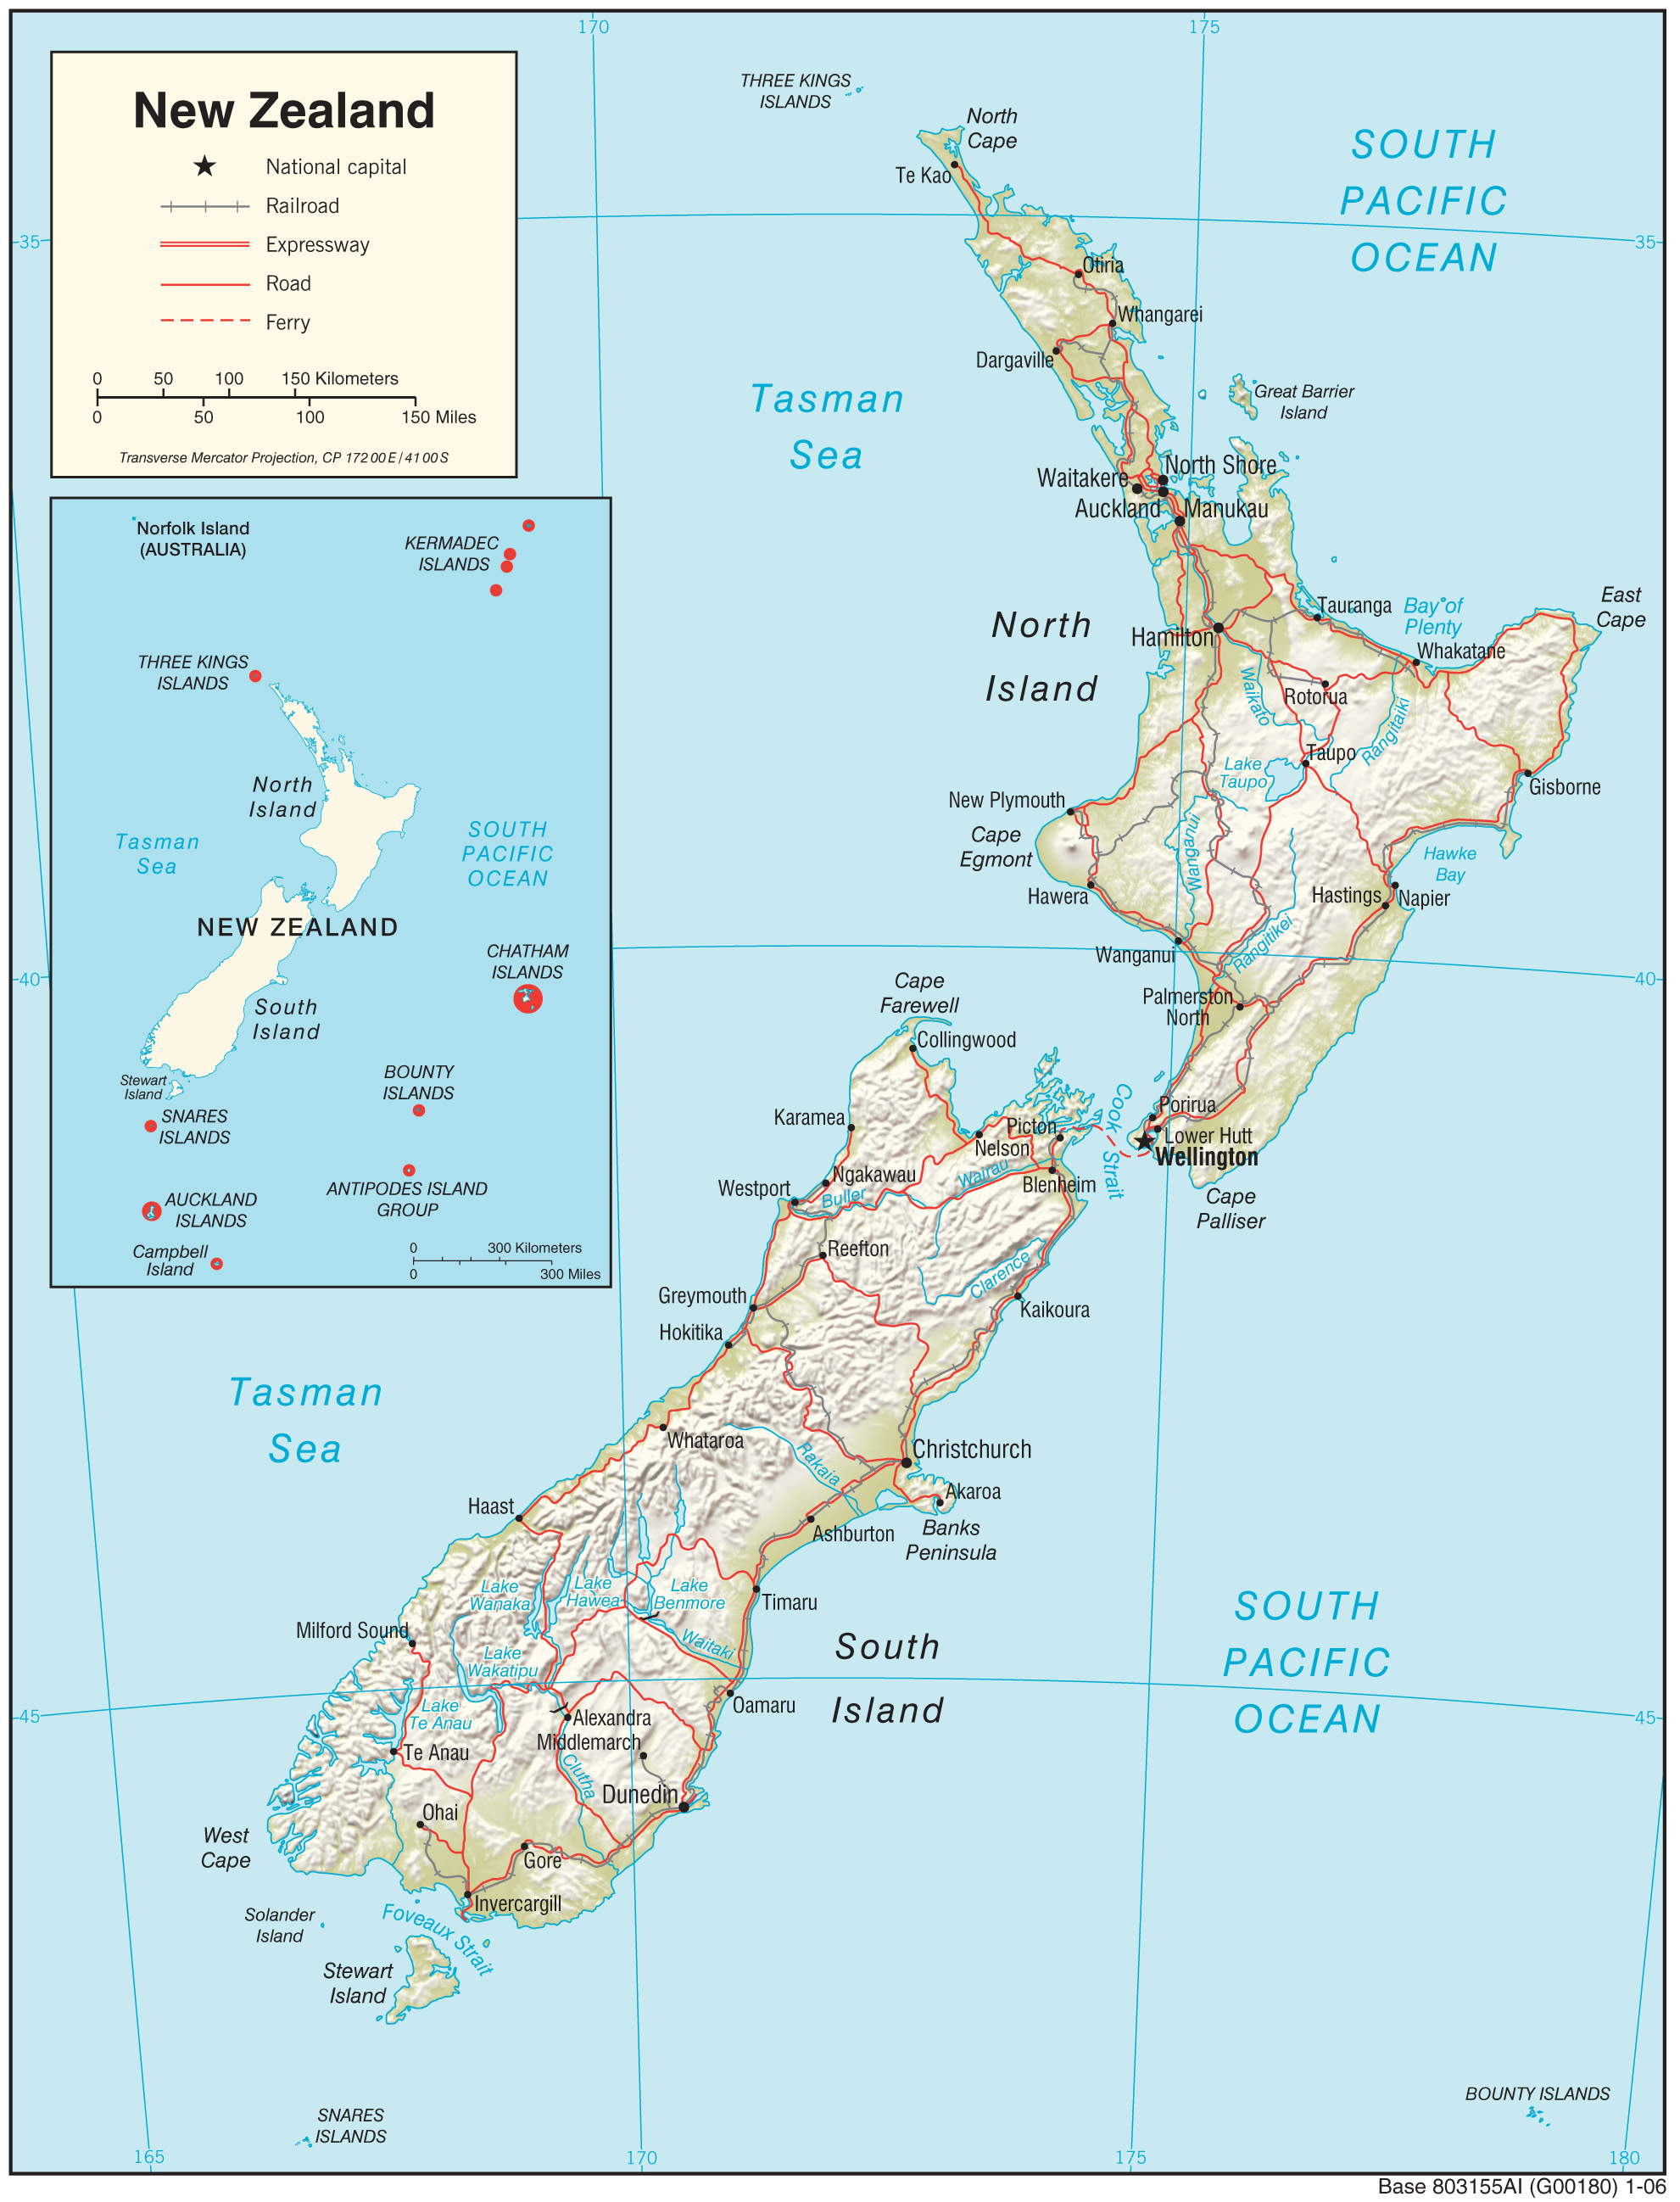 New Zealand Map | Fotolip.com Rich image and wallpaper